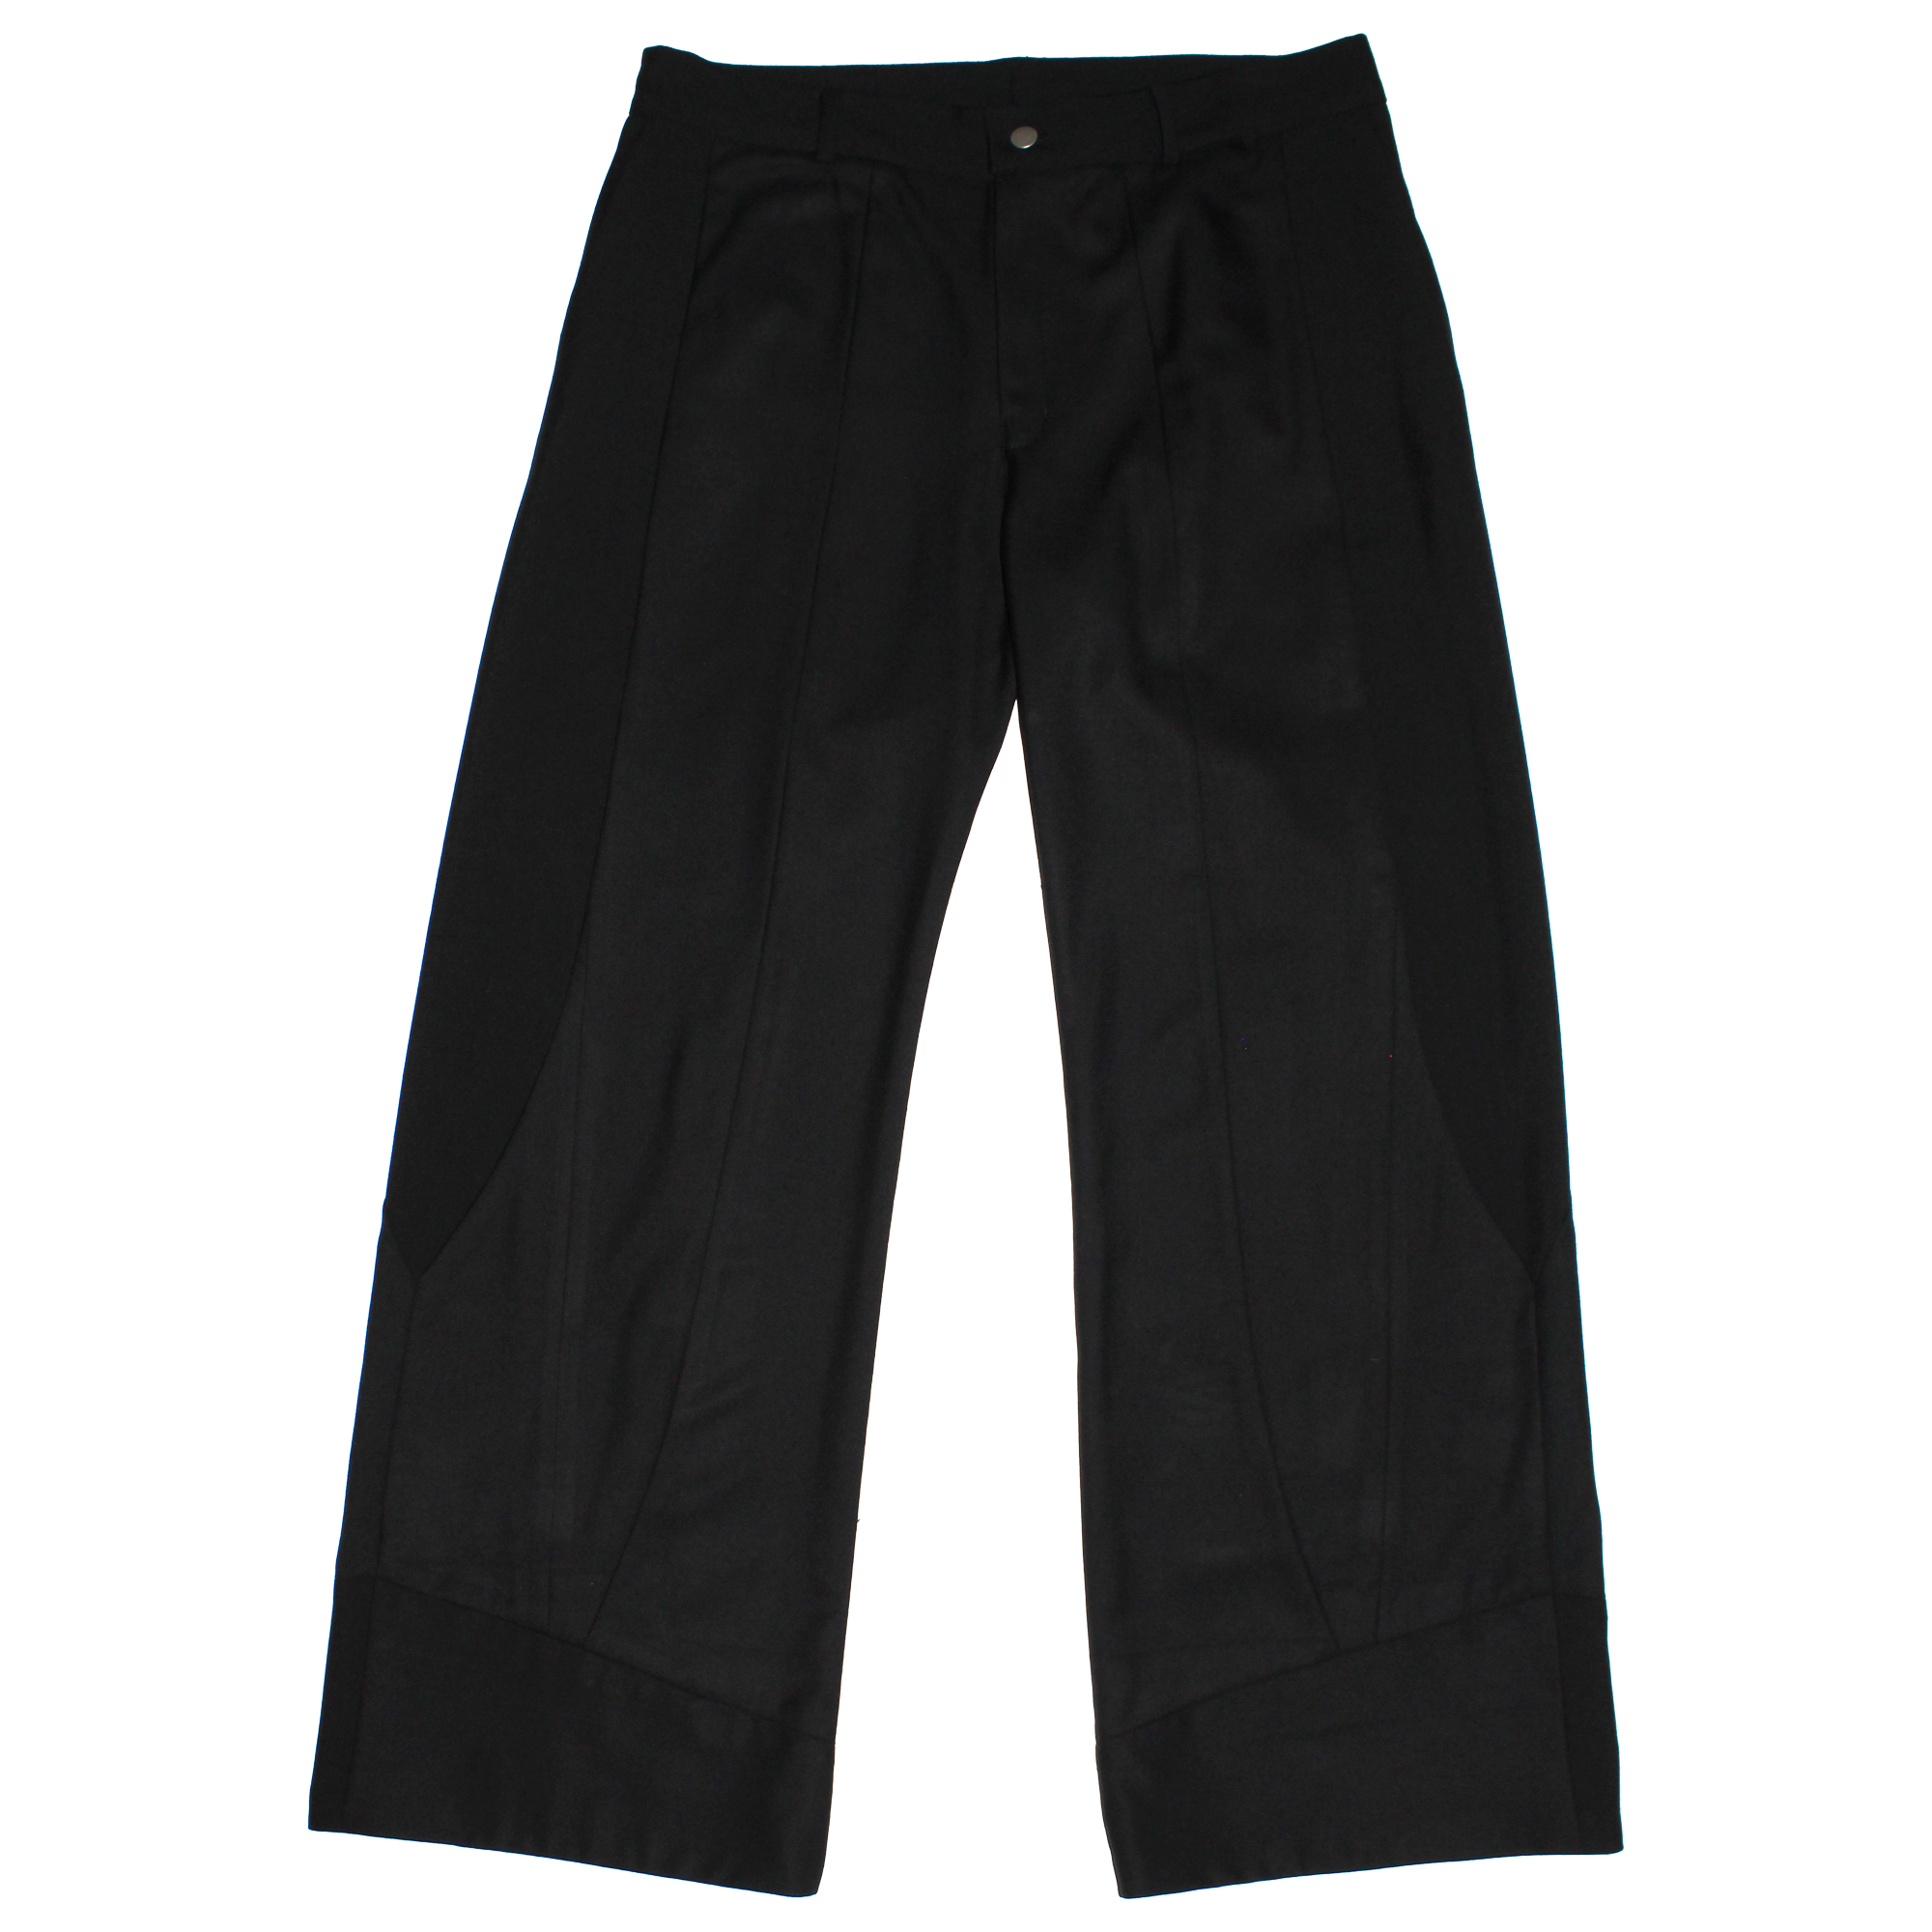 Black Sumi Paneled Trouser - Size 4